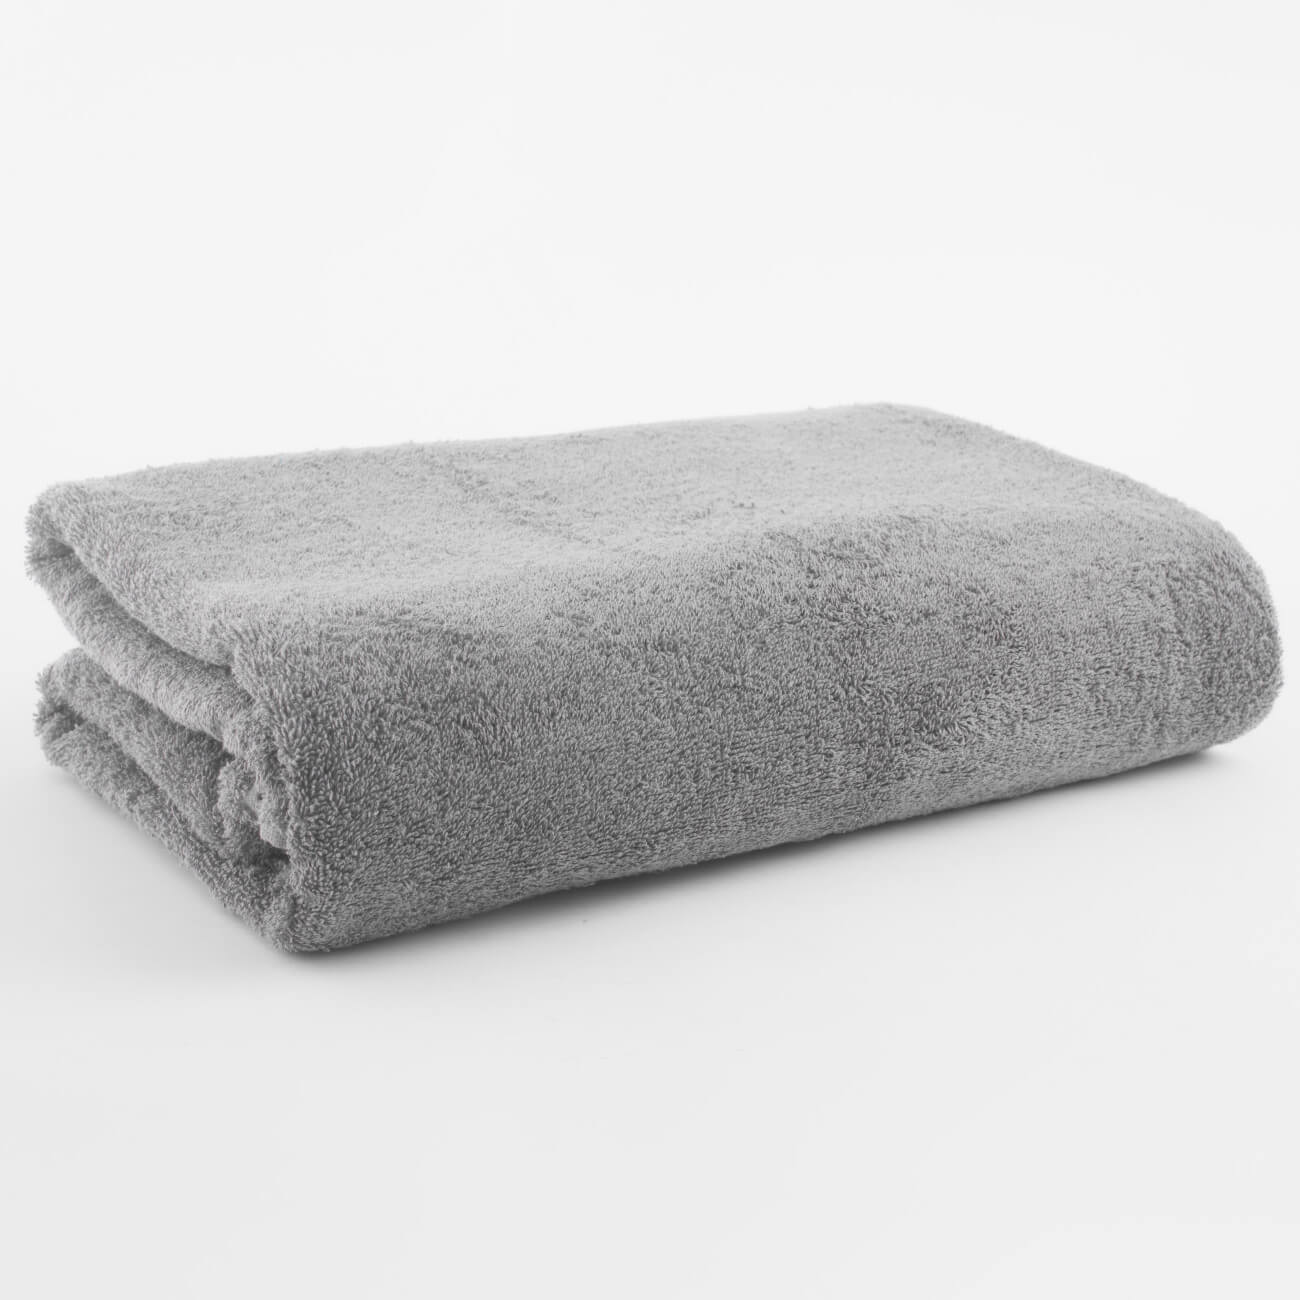 Полотенце, 100х150 см, хлопок, серое, Wellness набор для полотенце уголок рукавица